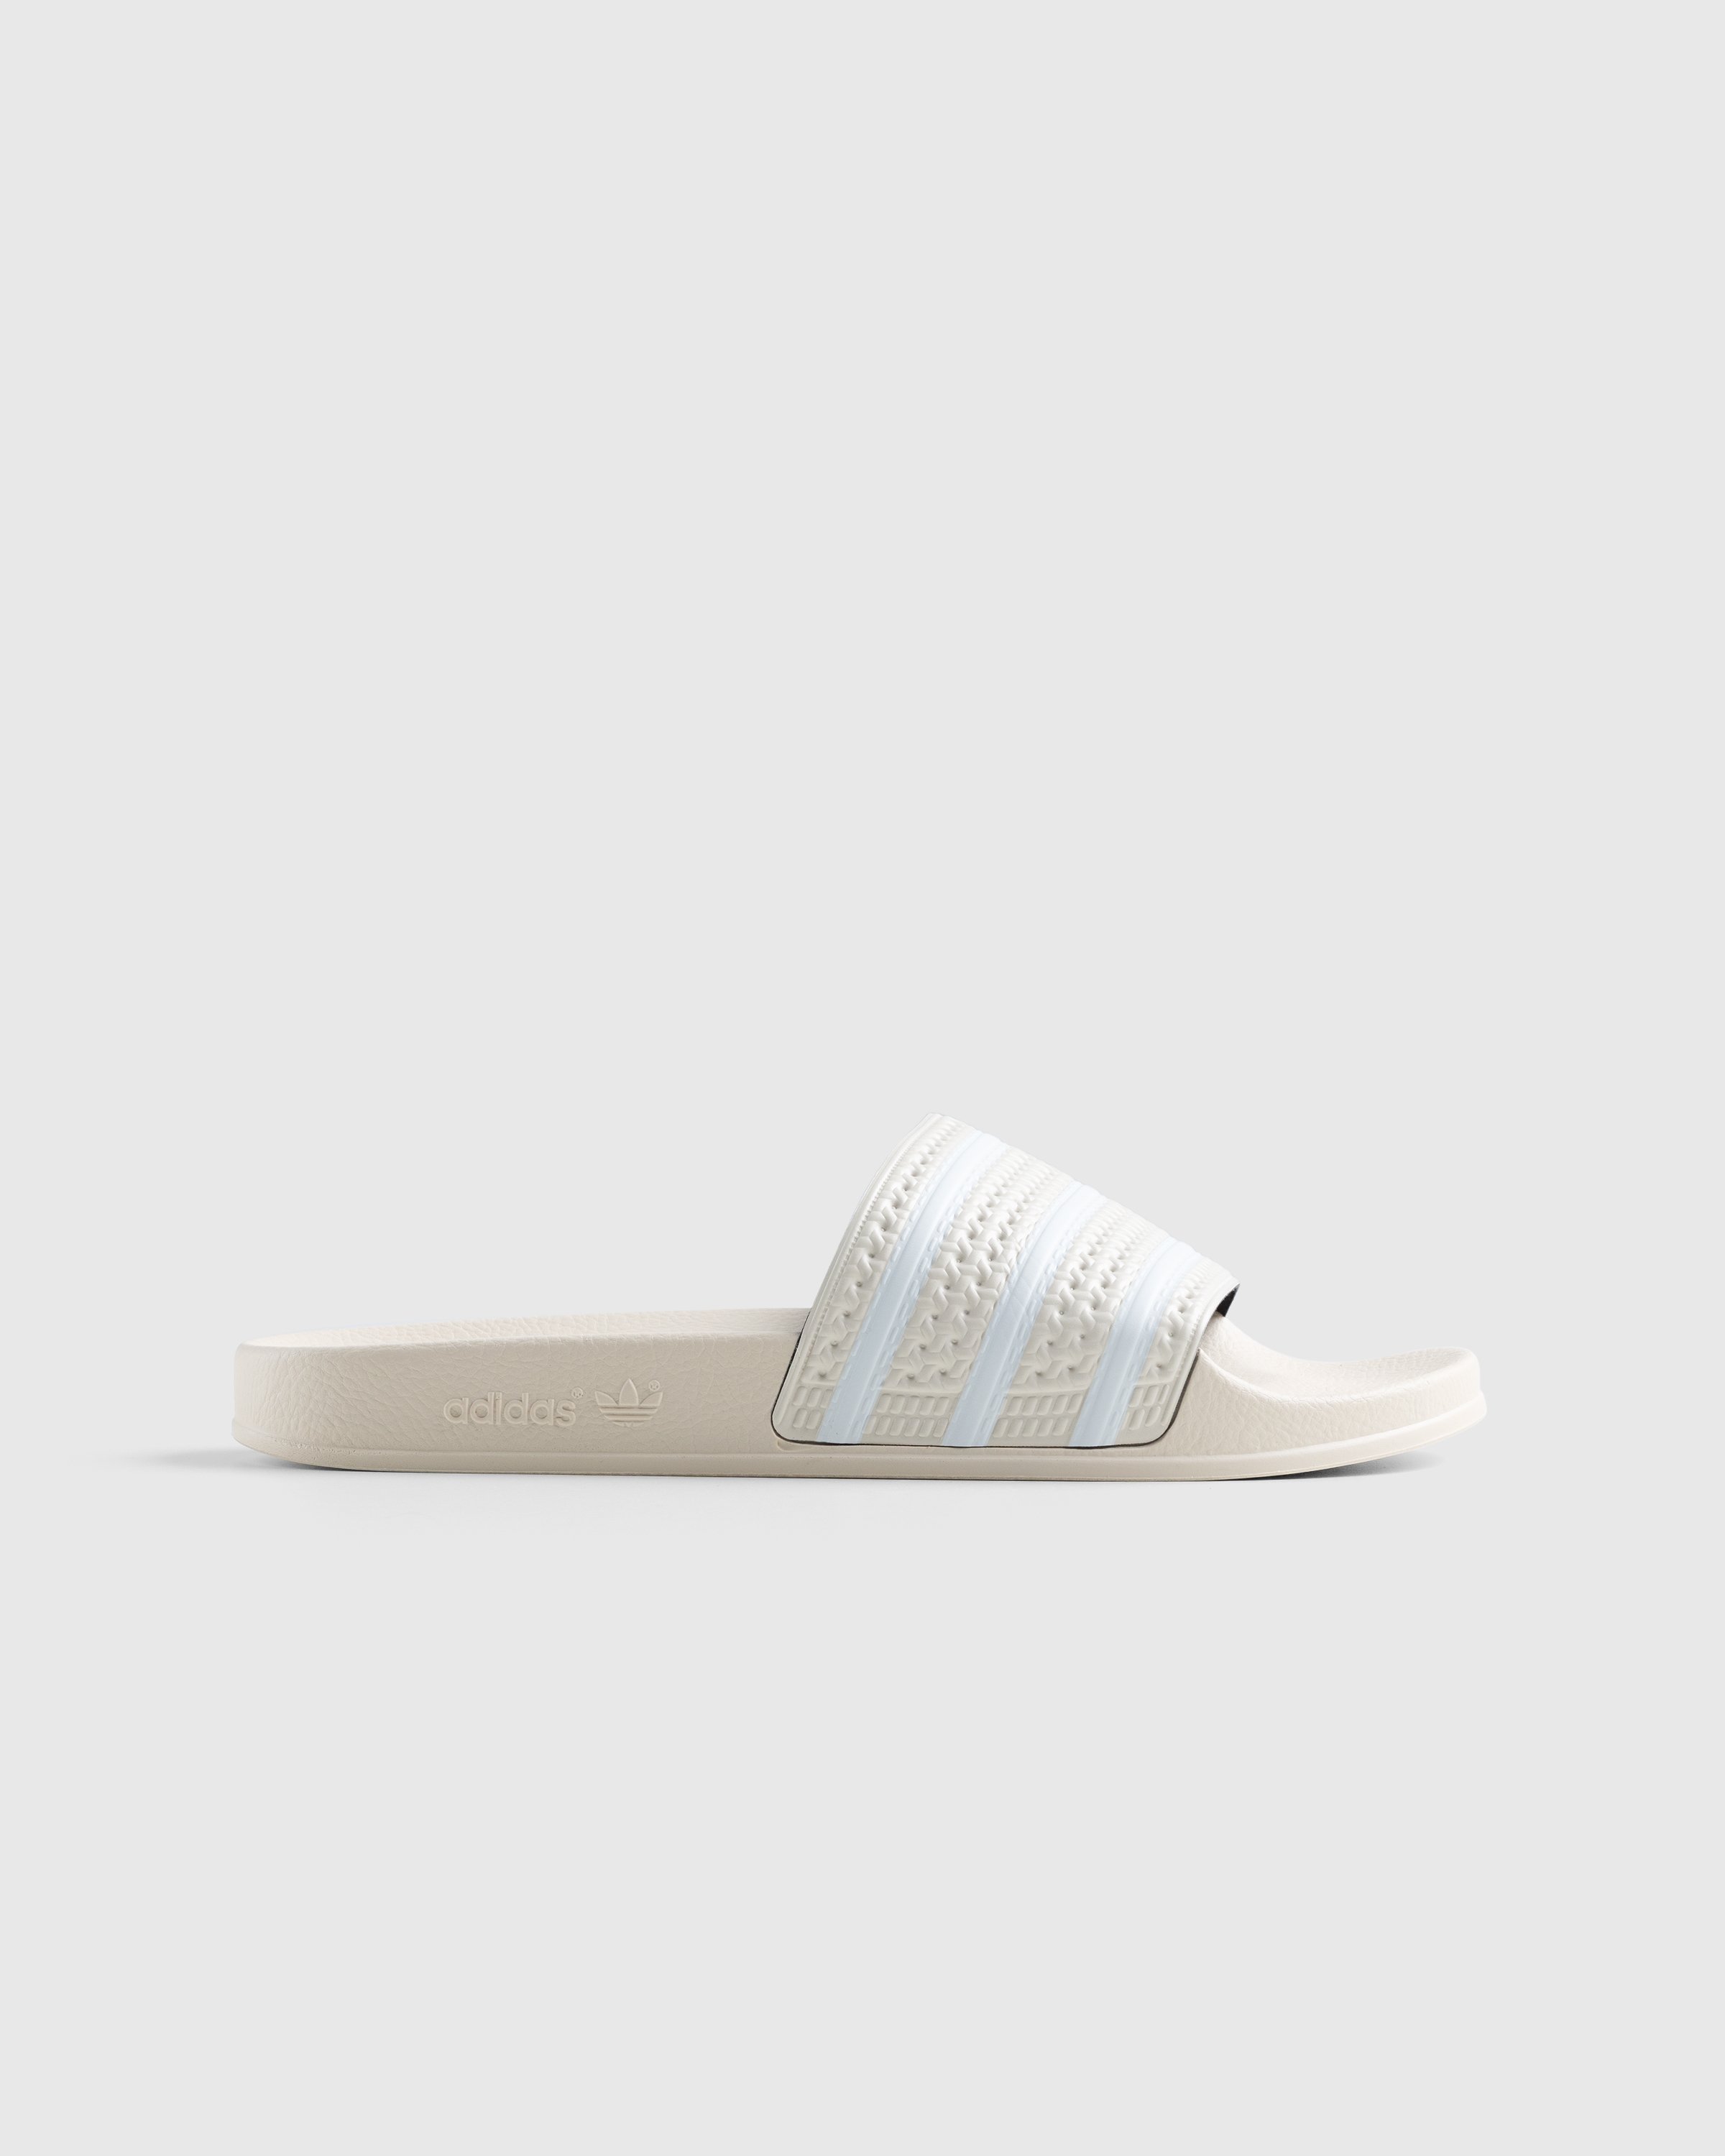 Adidas - Adilette Magic Beige/Cloud White/Off White - Footwear - Beige - Image 1